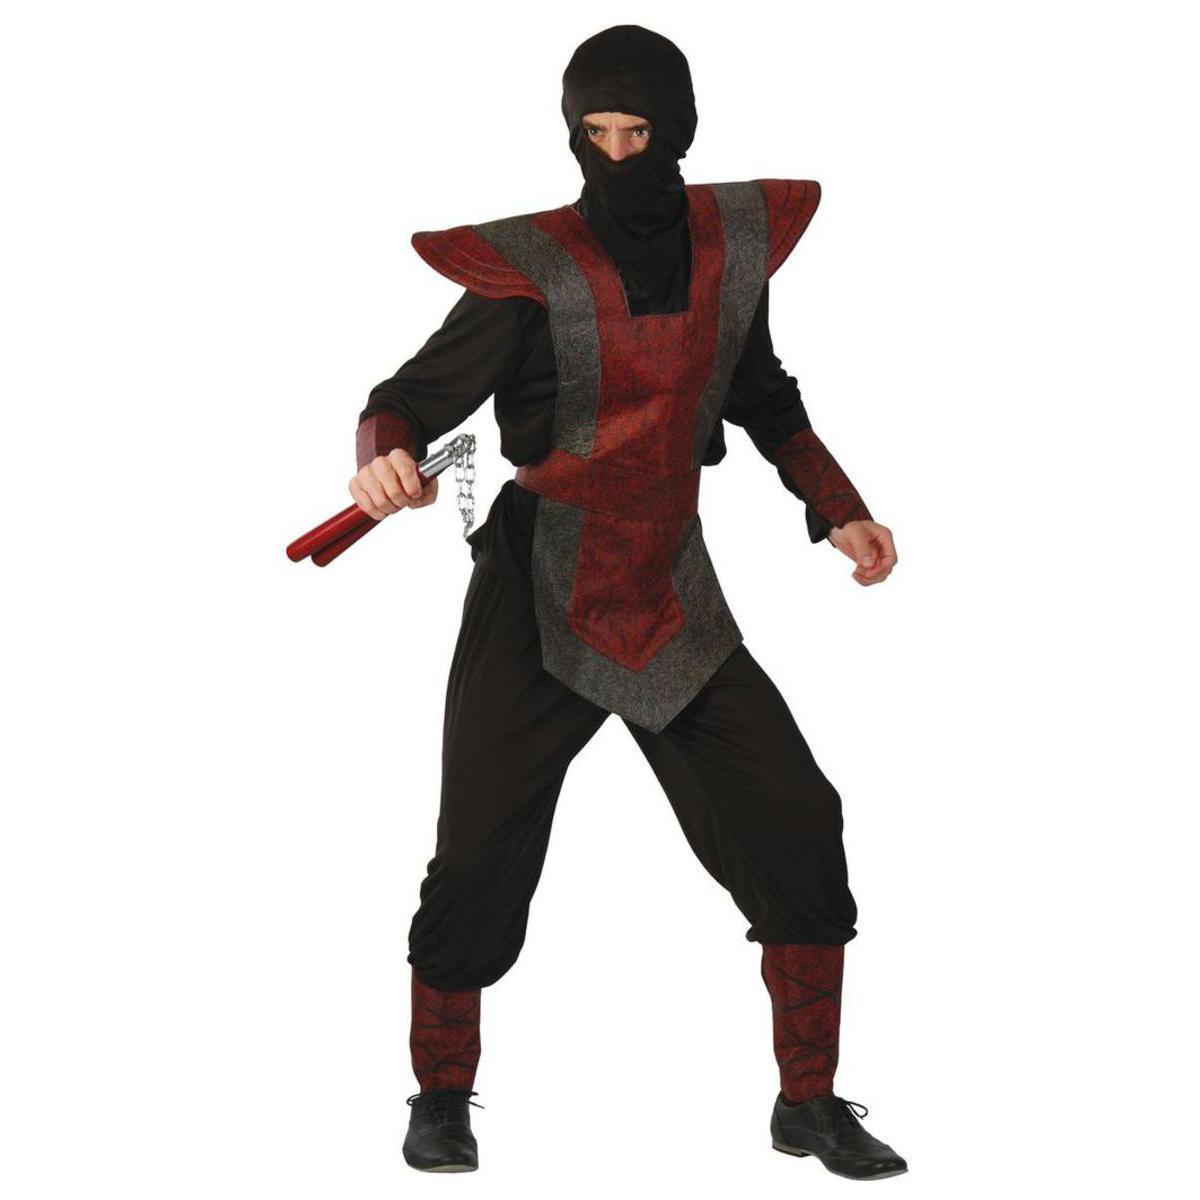 Costume adulte luxe Ninja en polyester - L/XL - Multicolore